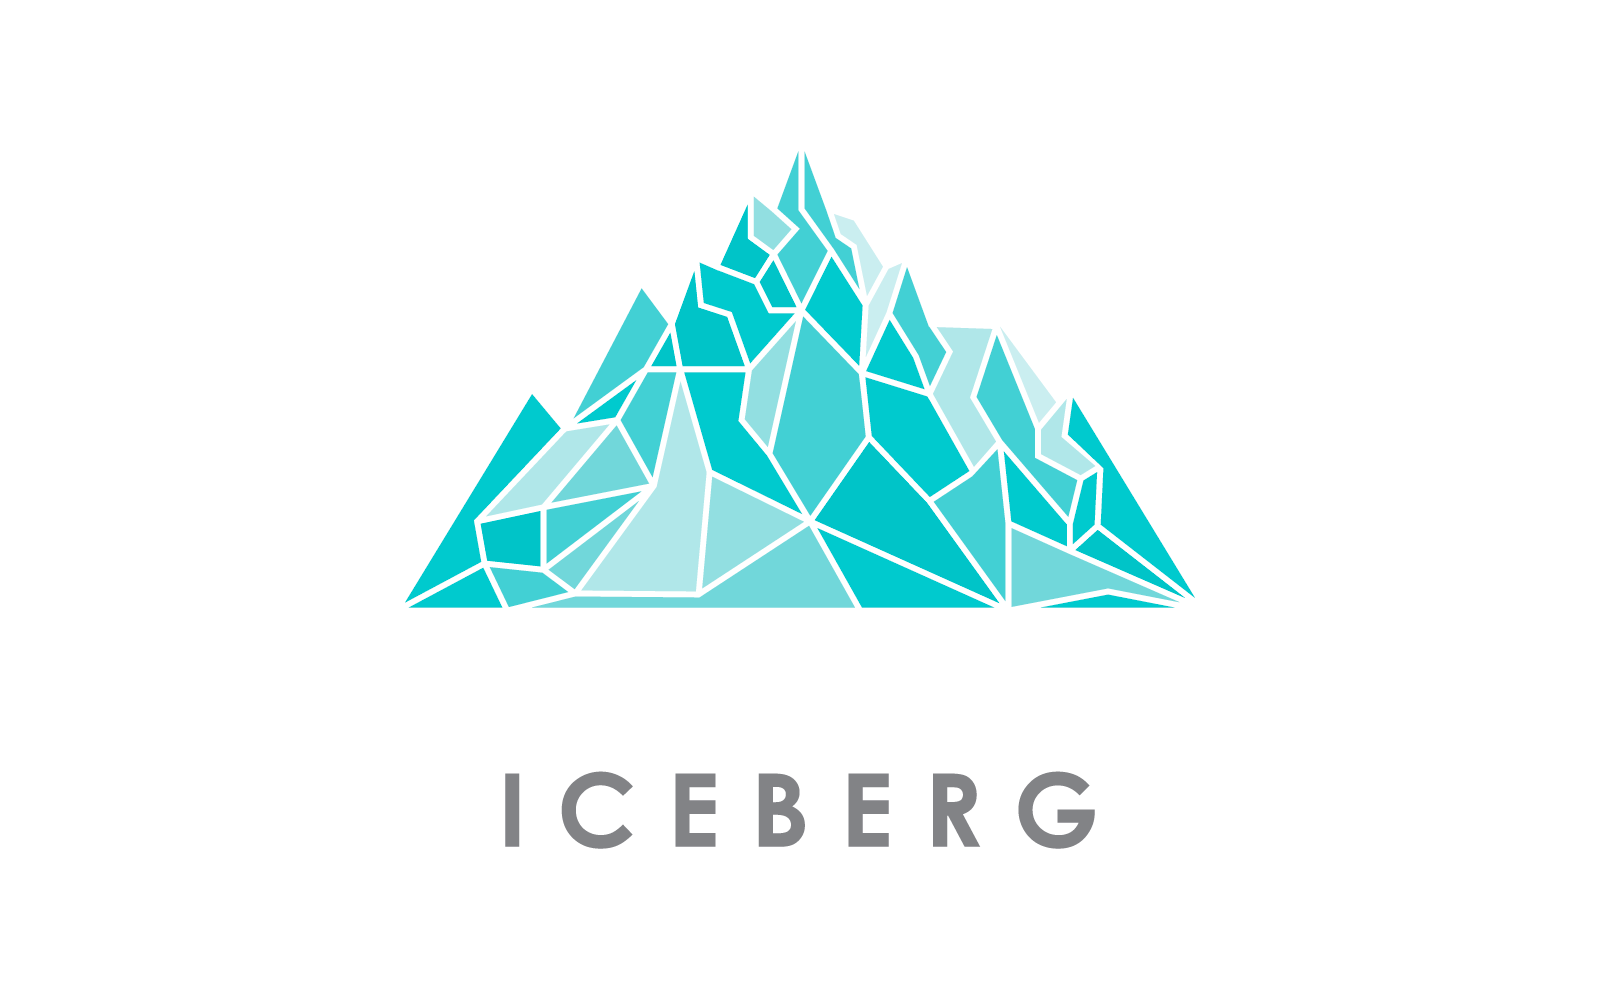 Iceberg illustration logo vector flat design template